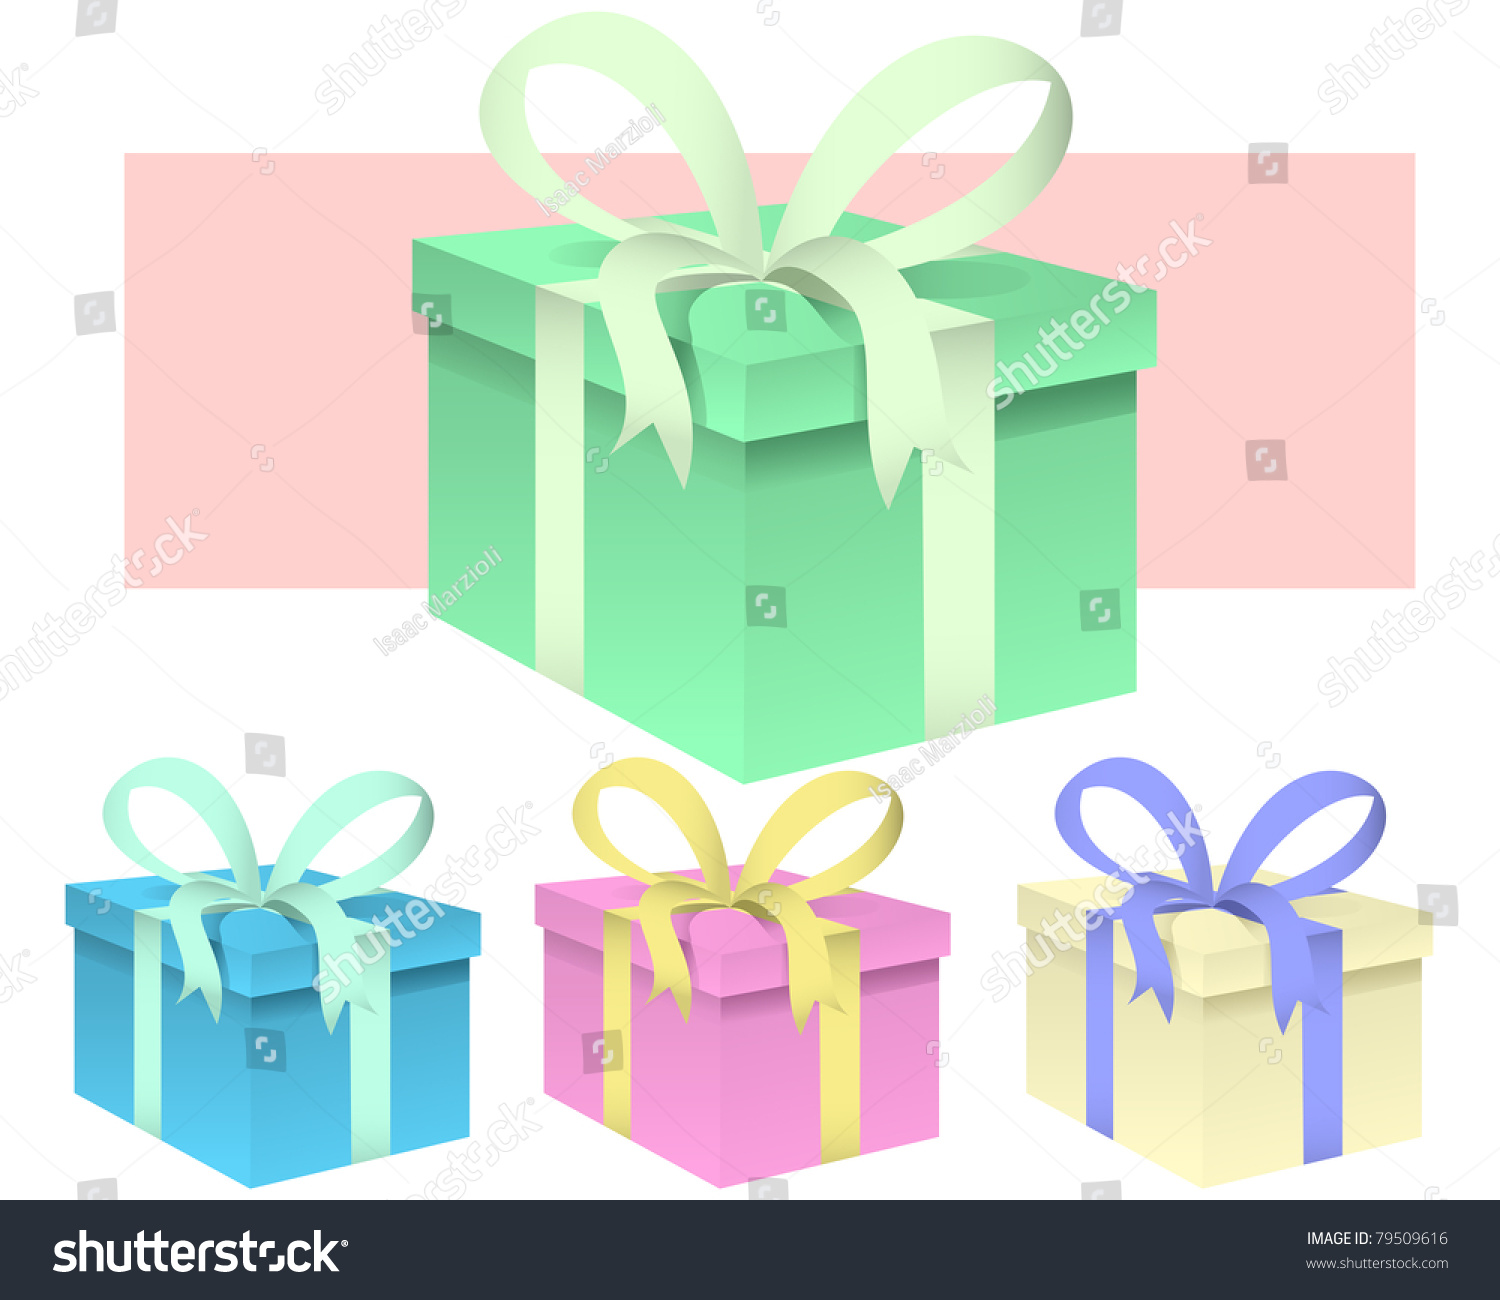 Set Of Presents - Vector Illustration - 79509616 : Shutterstock